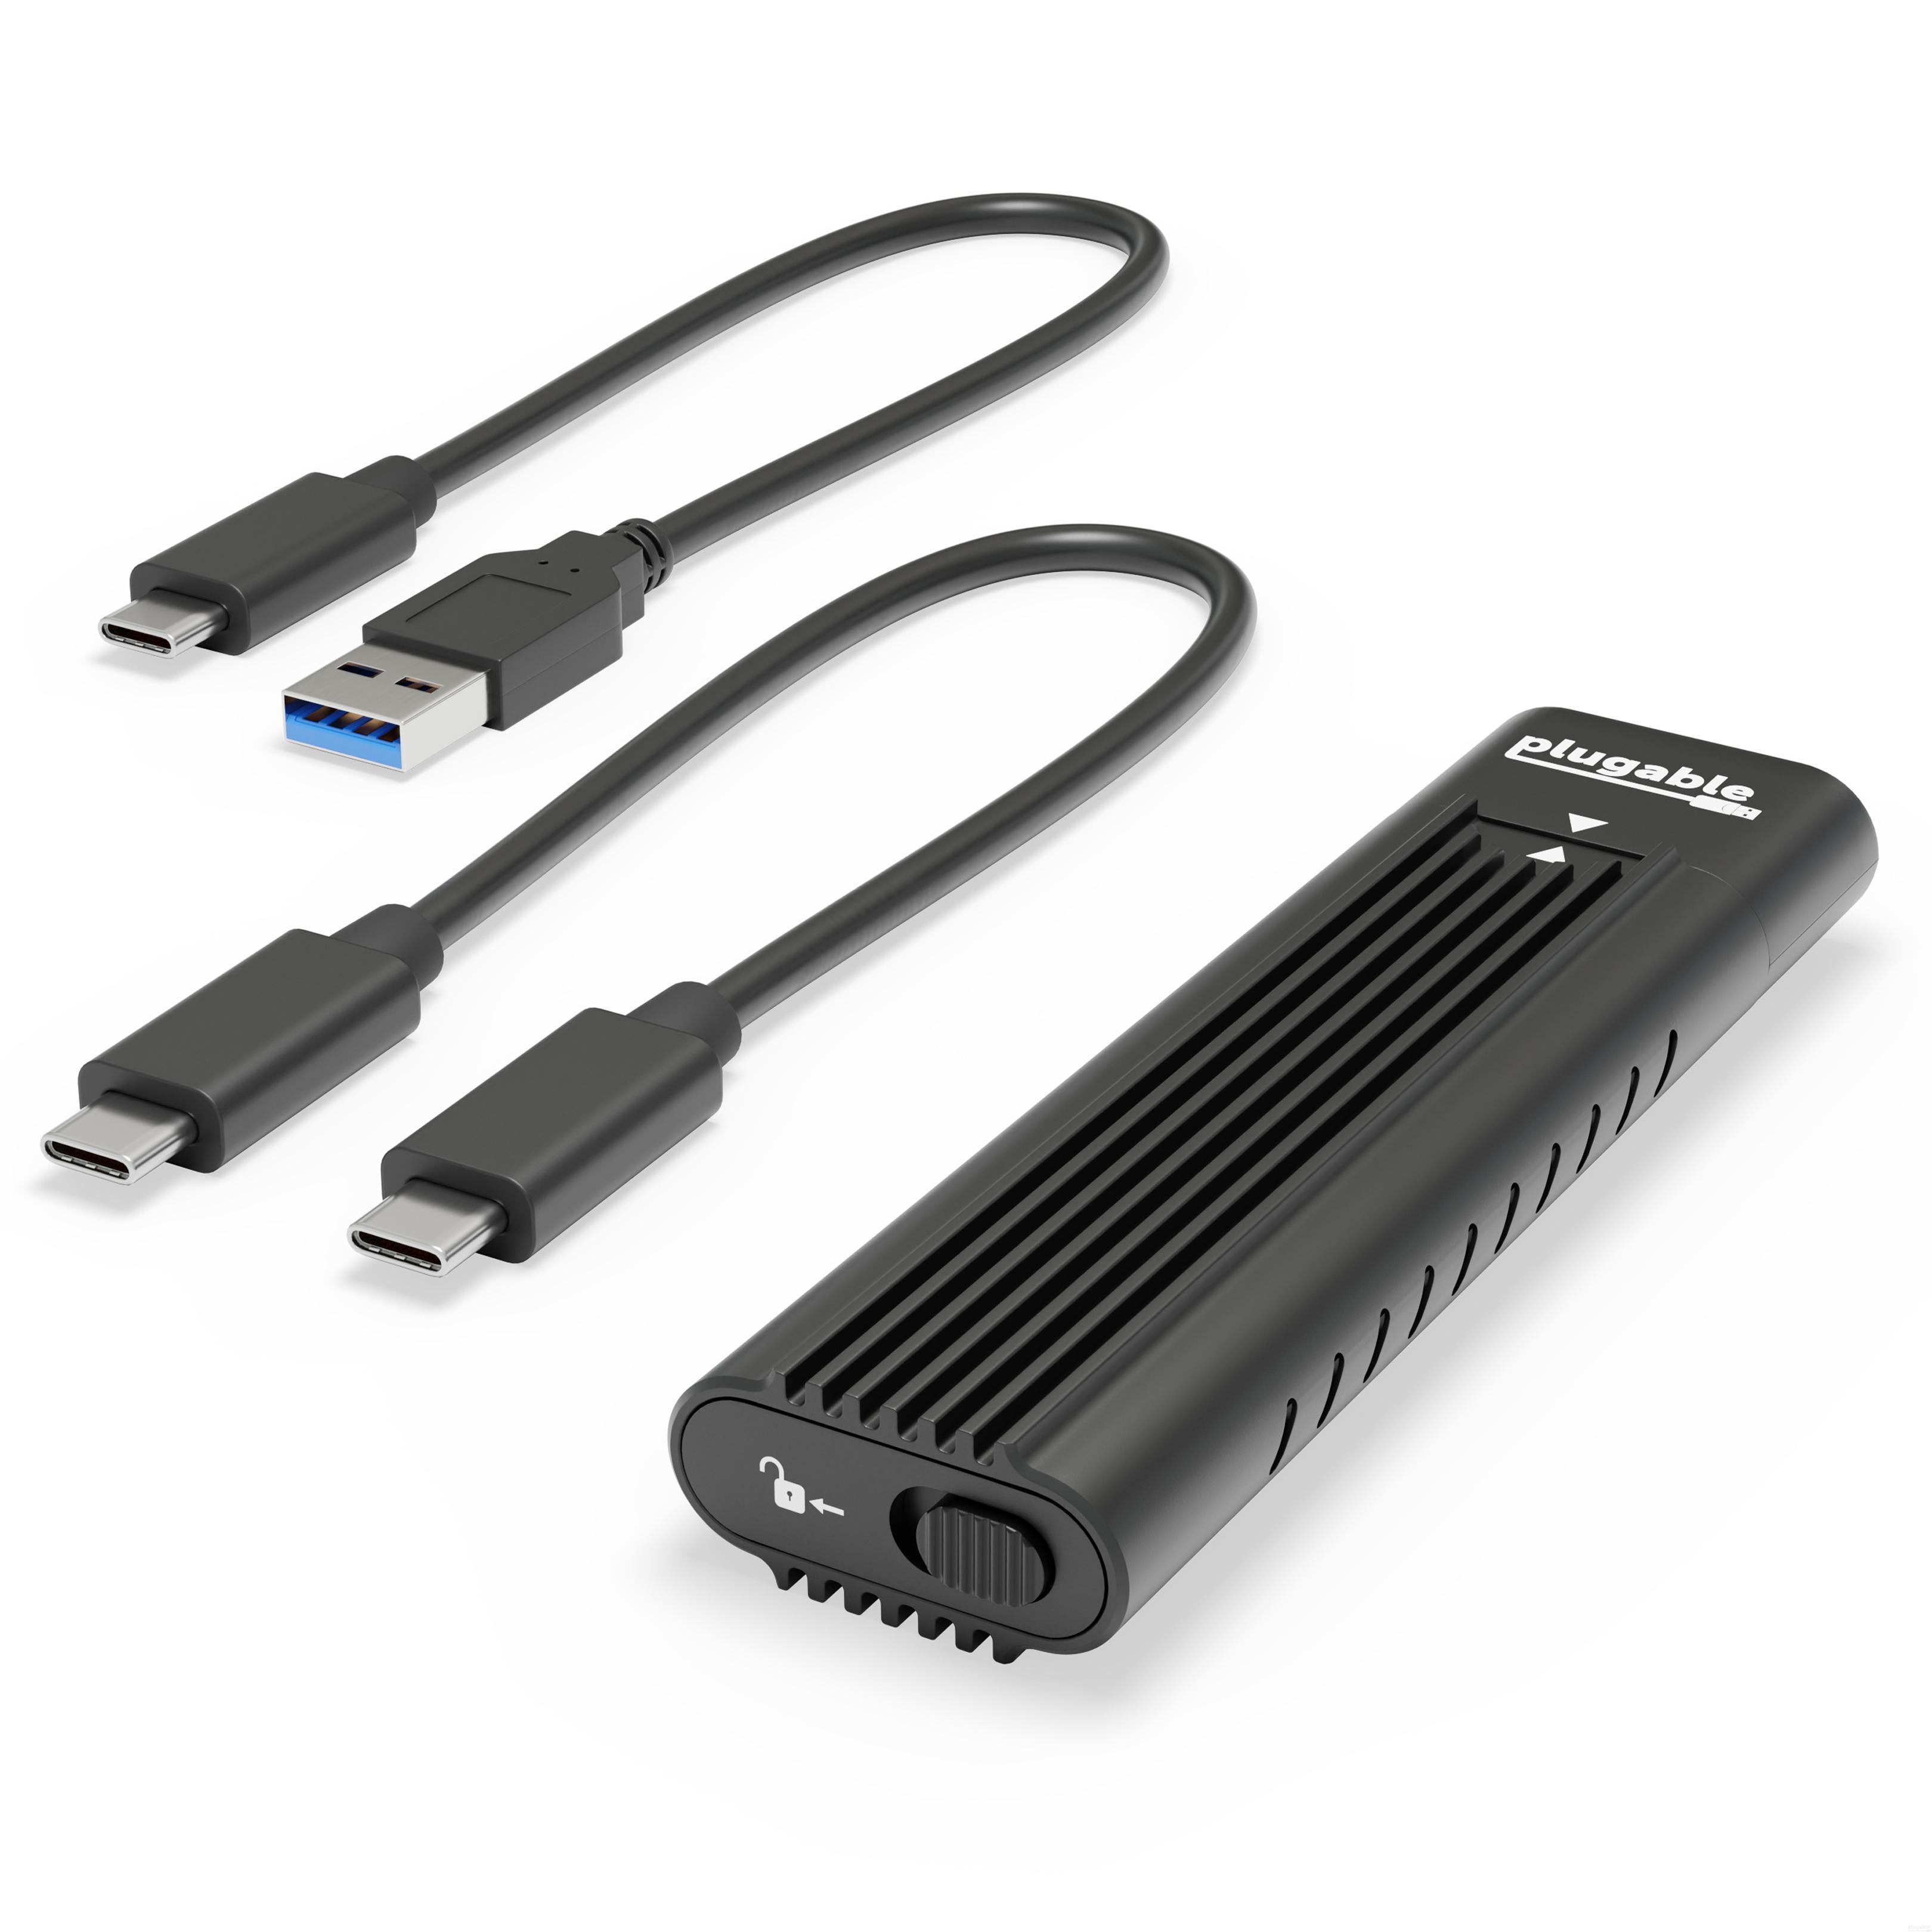 Plugable USB 3.1 Gen 2 NVMe Enclosure – Plugable Technologies